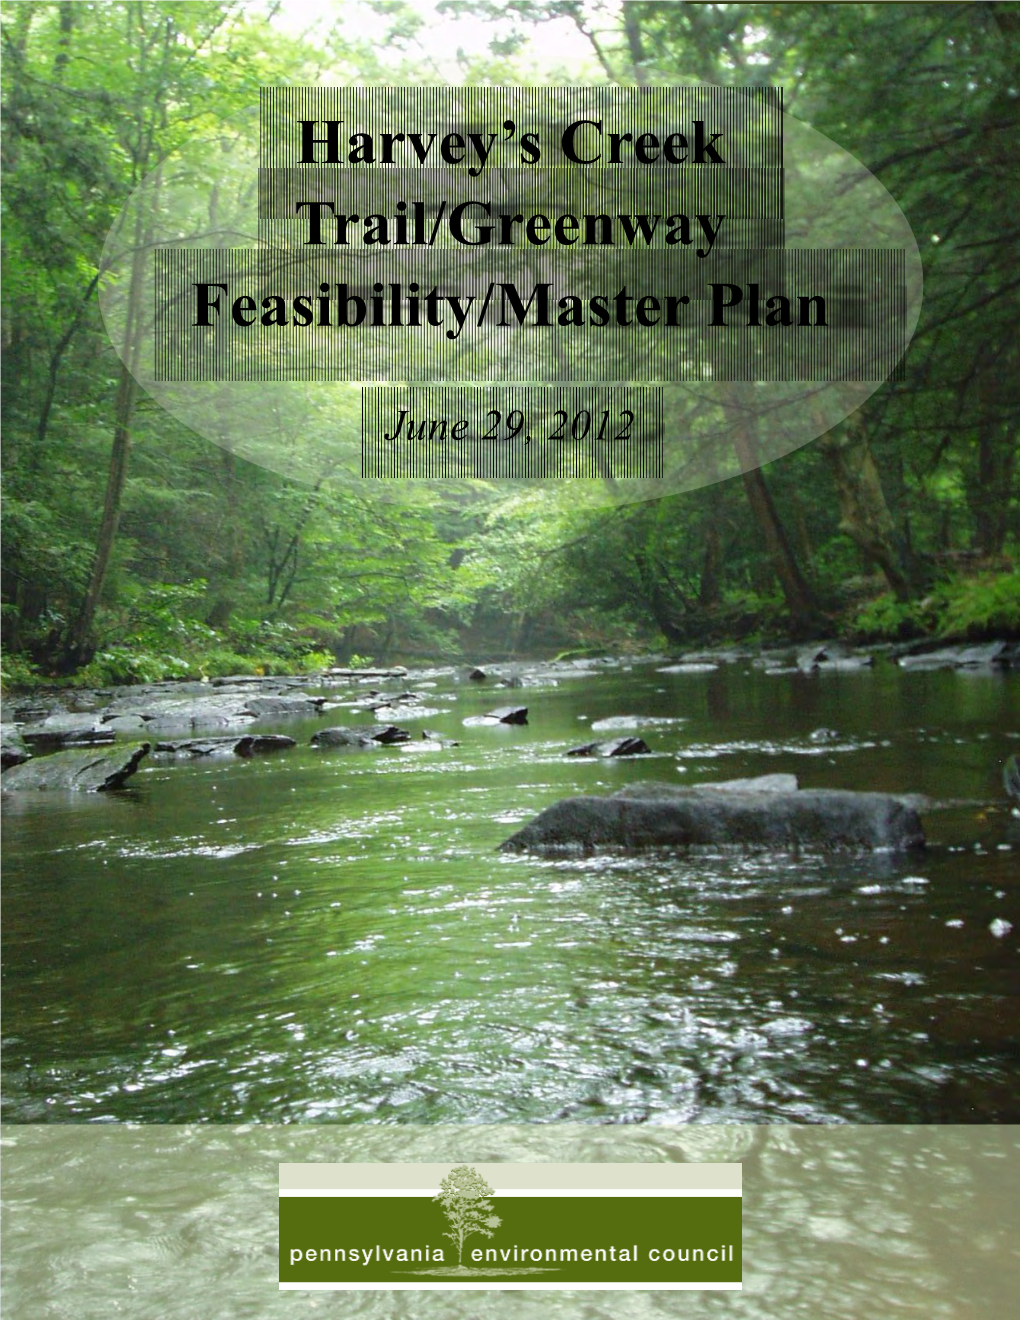 Harvey's Creek Trail/Greenway Feasibility/Master Plan